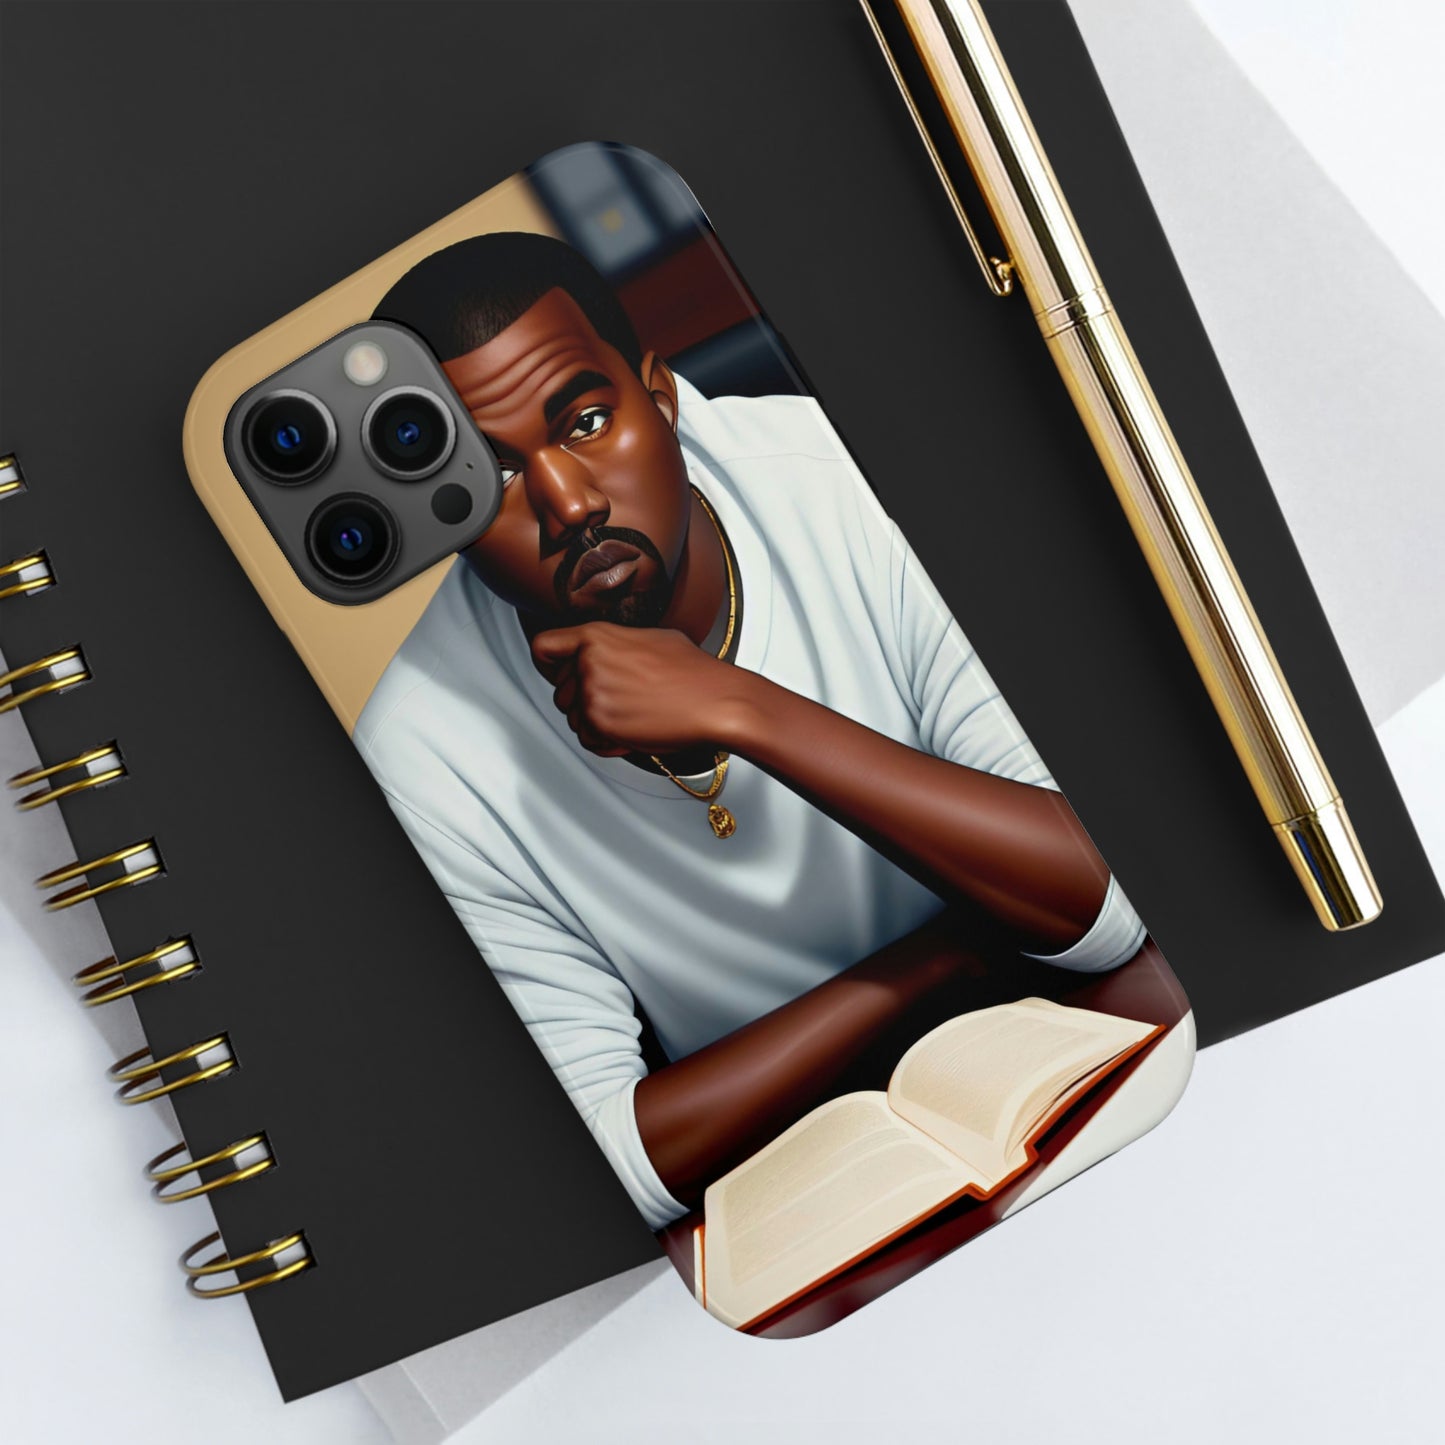 Kanye Studies Phone Case